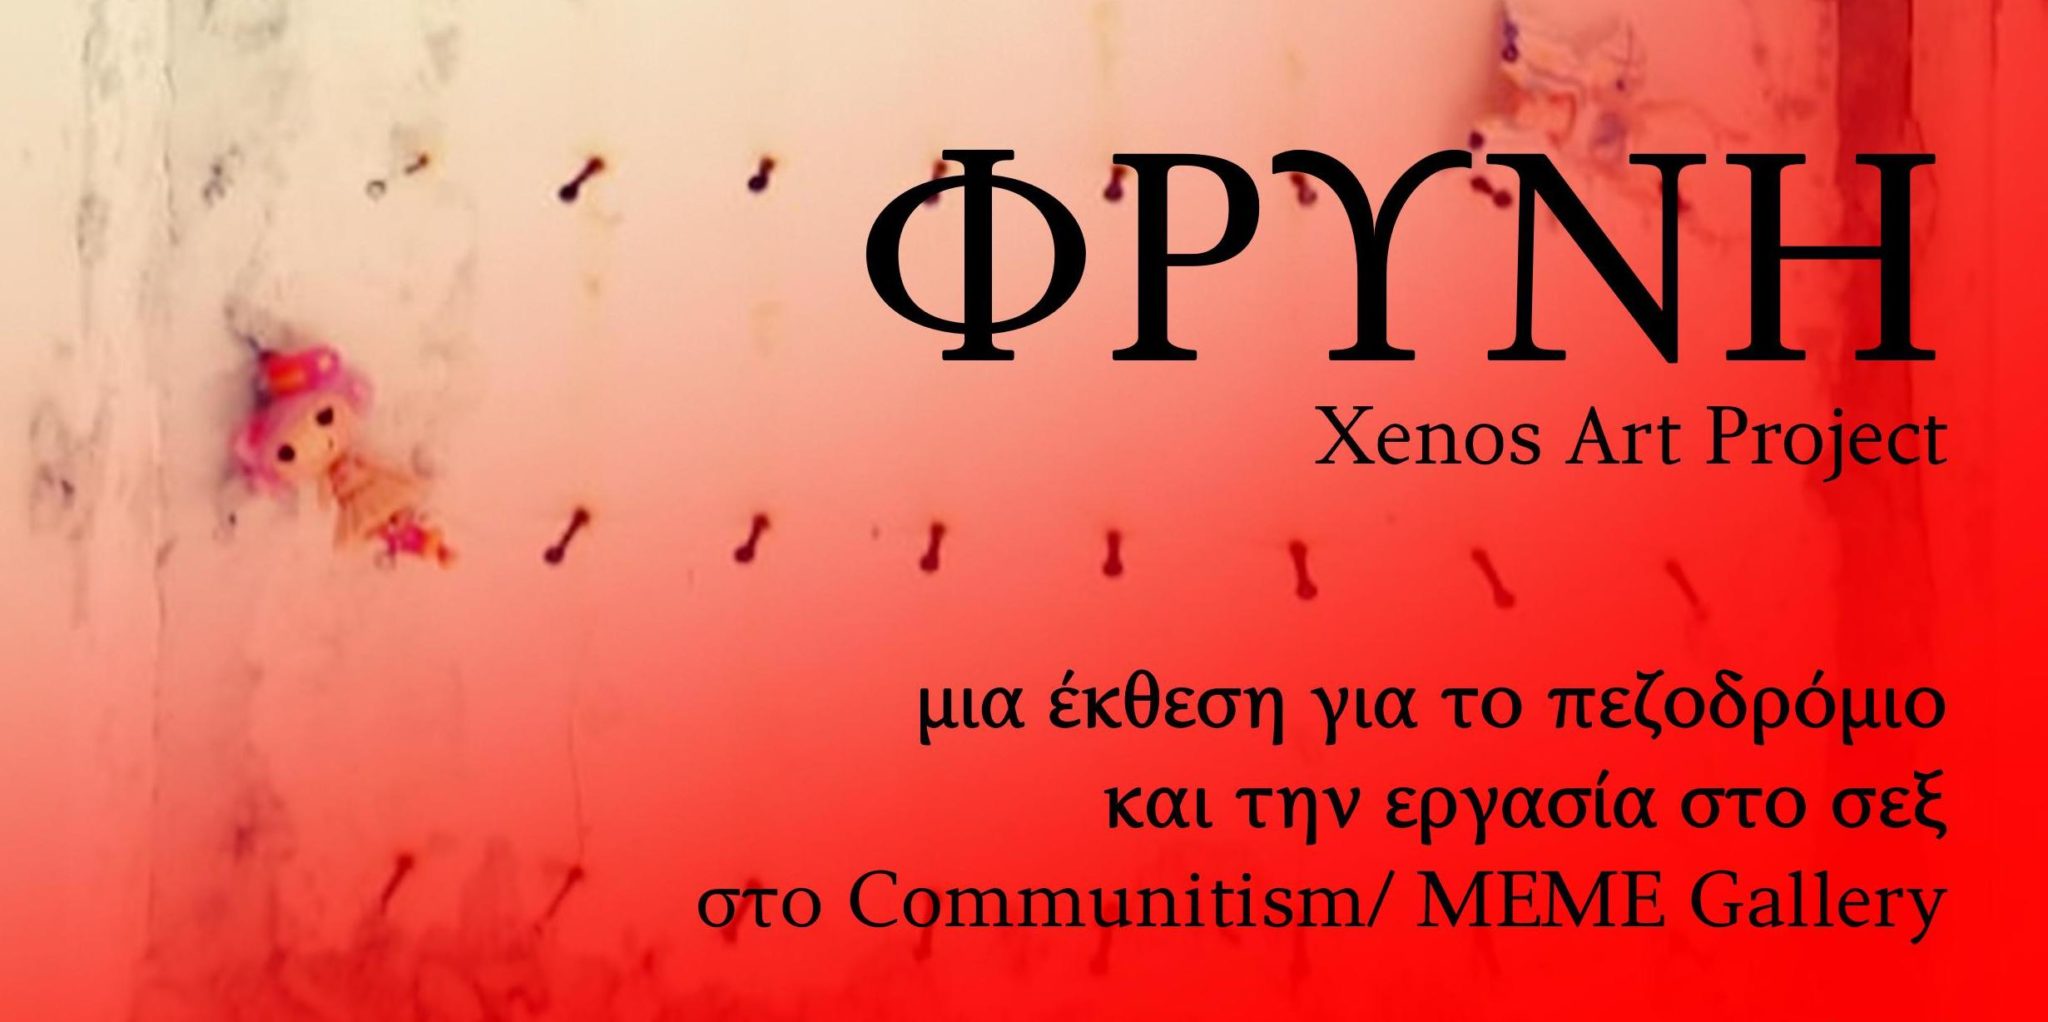 Featured image for “Εικαστική έκθεση “ΦΡΥΝΗ Xenos Project” για την εργασία στο σεξ”